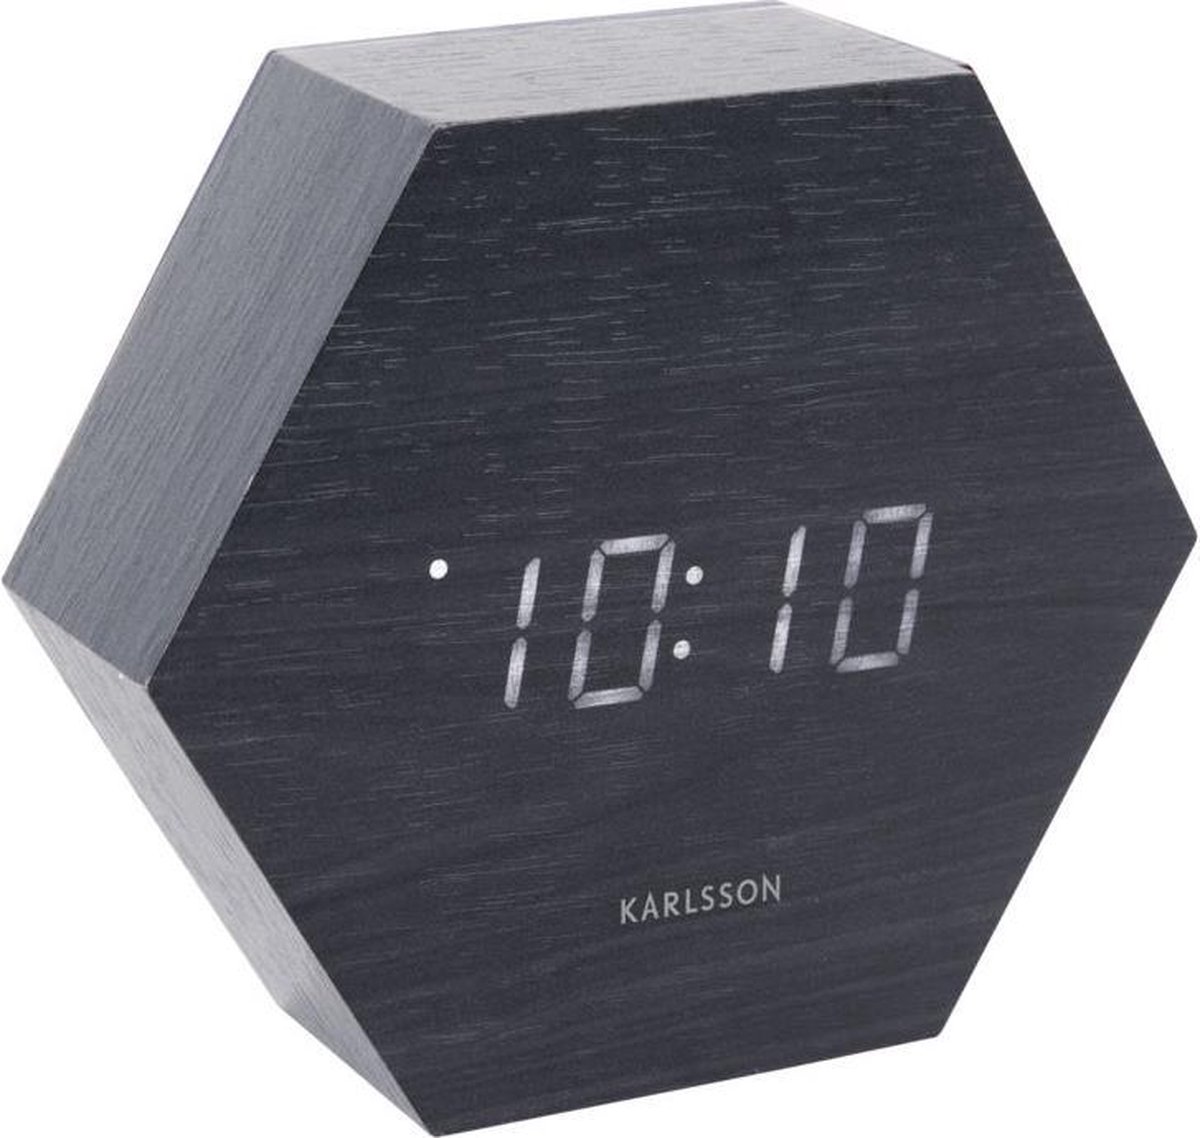 Karlsson Hexagon Wekker 13 x 11 cm - Zwart